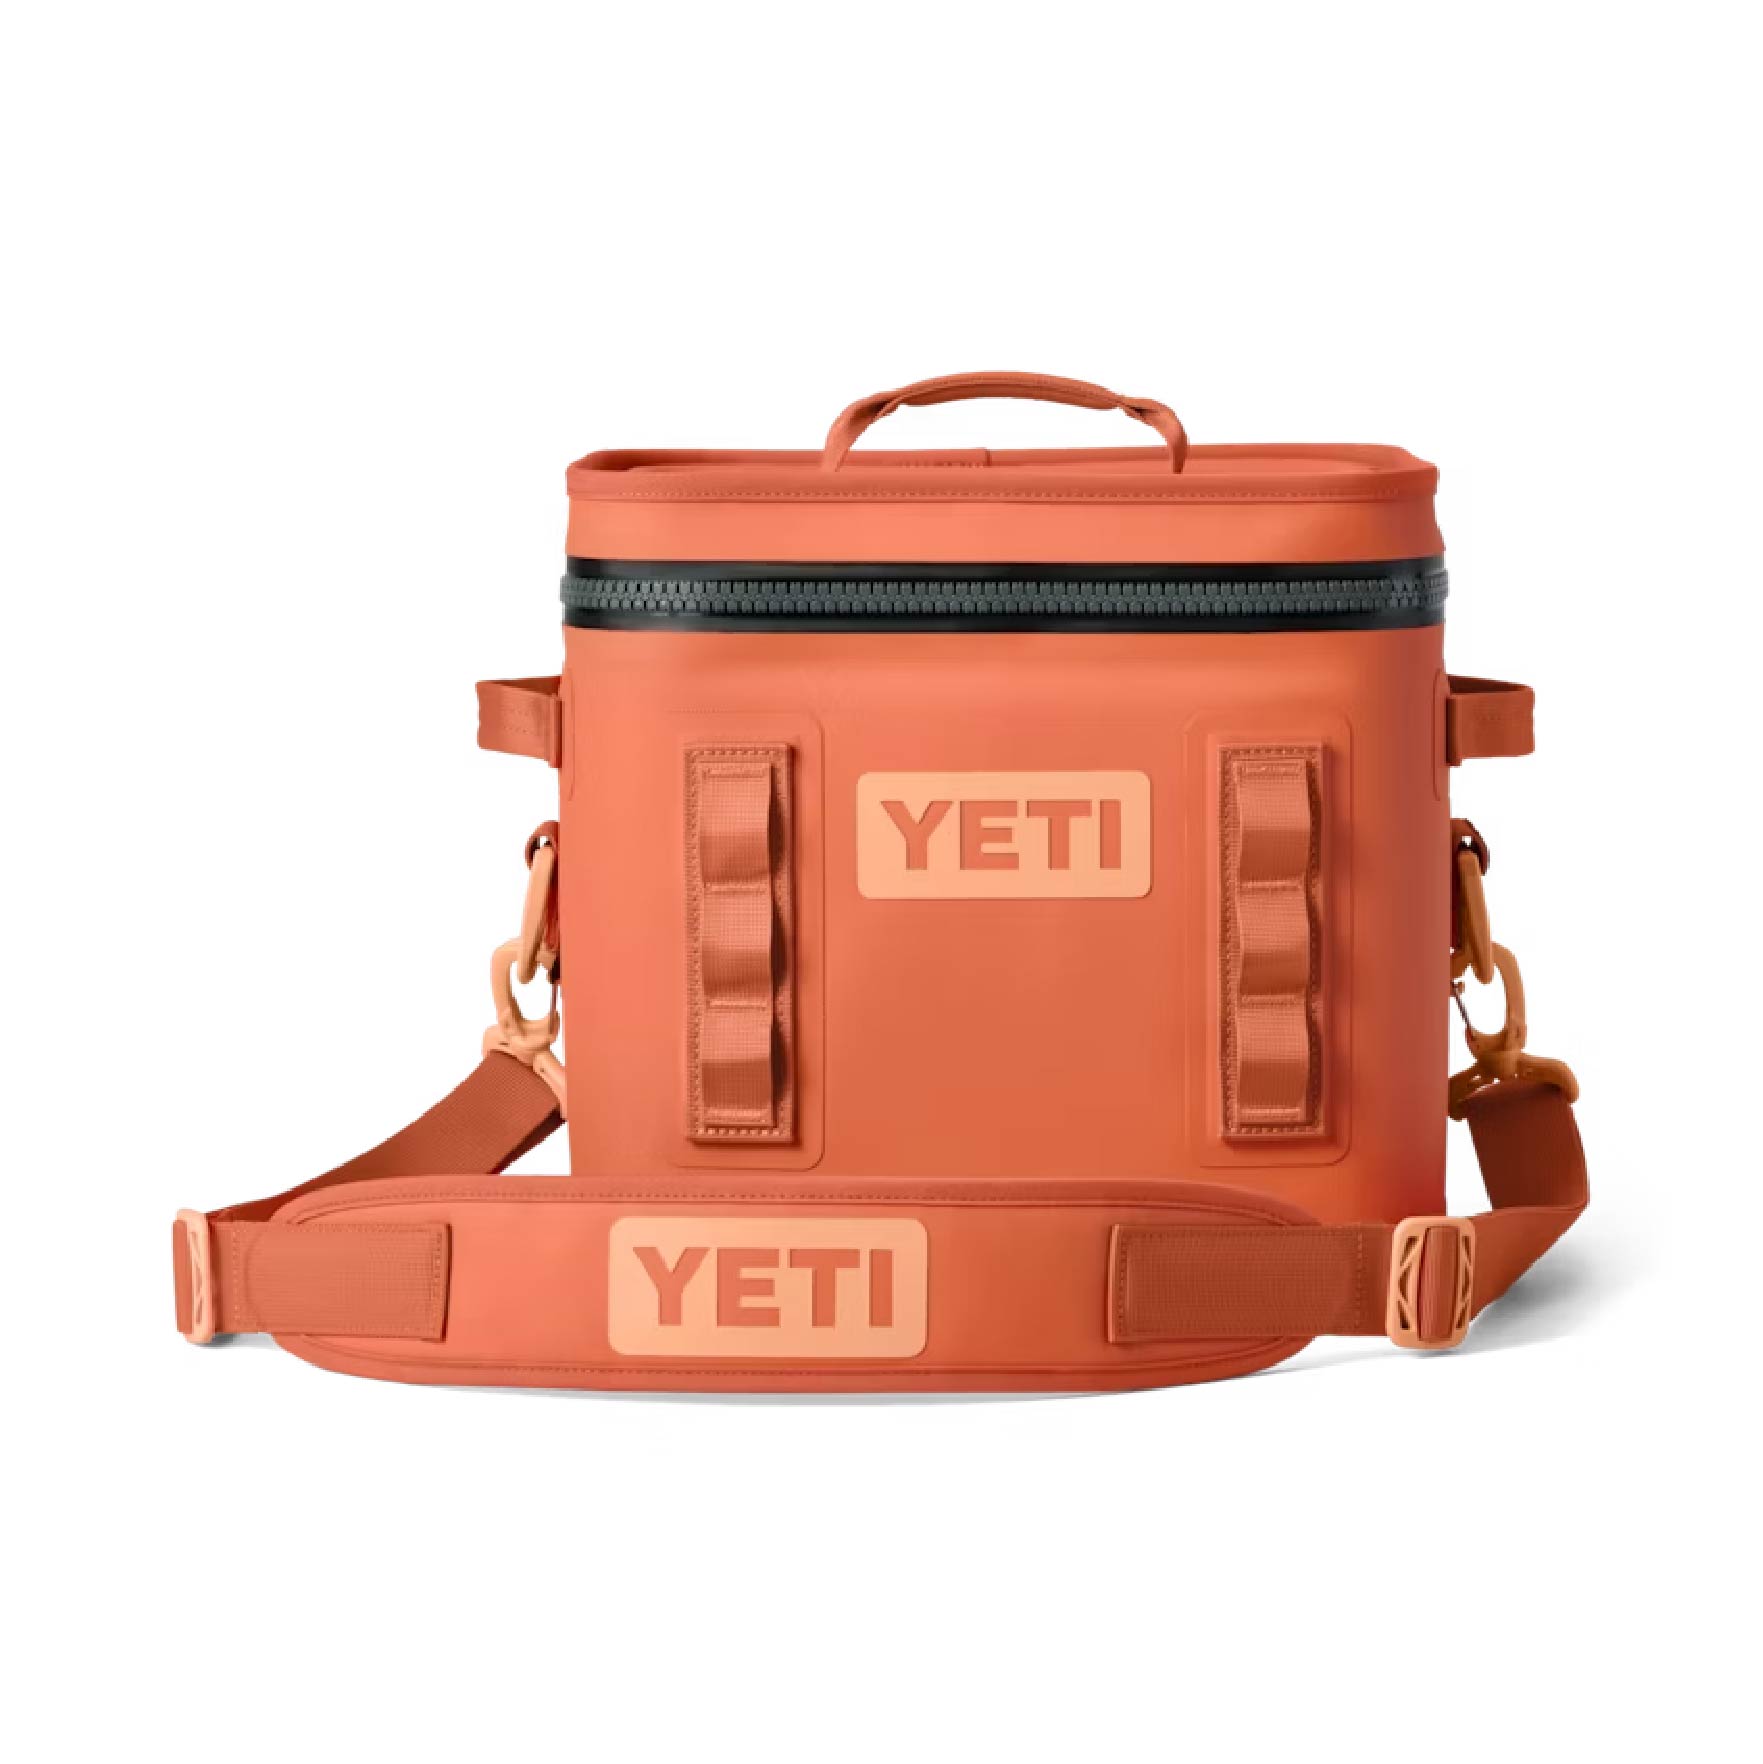 YETI Hopper 20 - 20 Quart Extreme Portable Soft Cooler